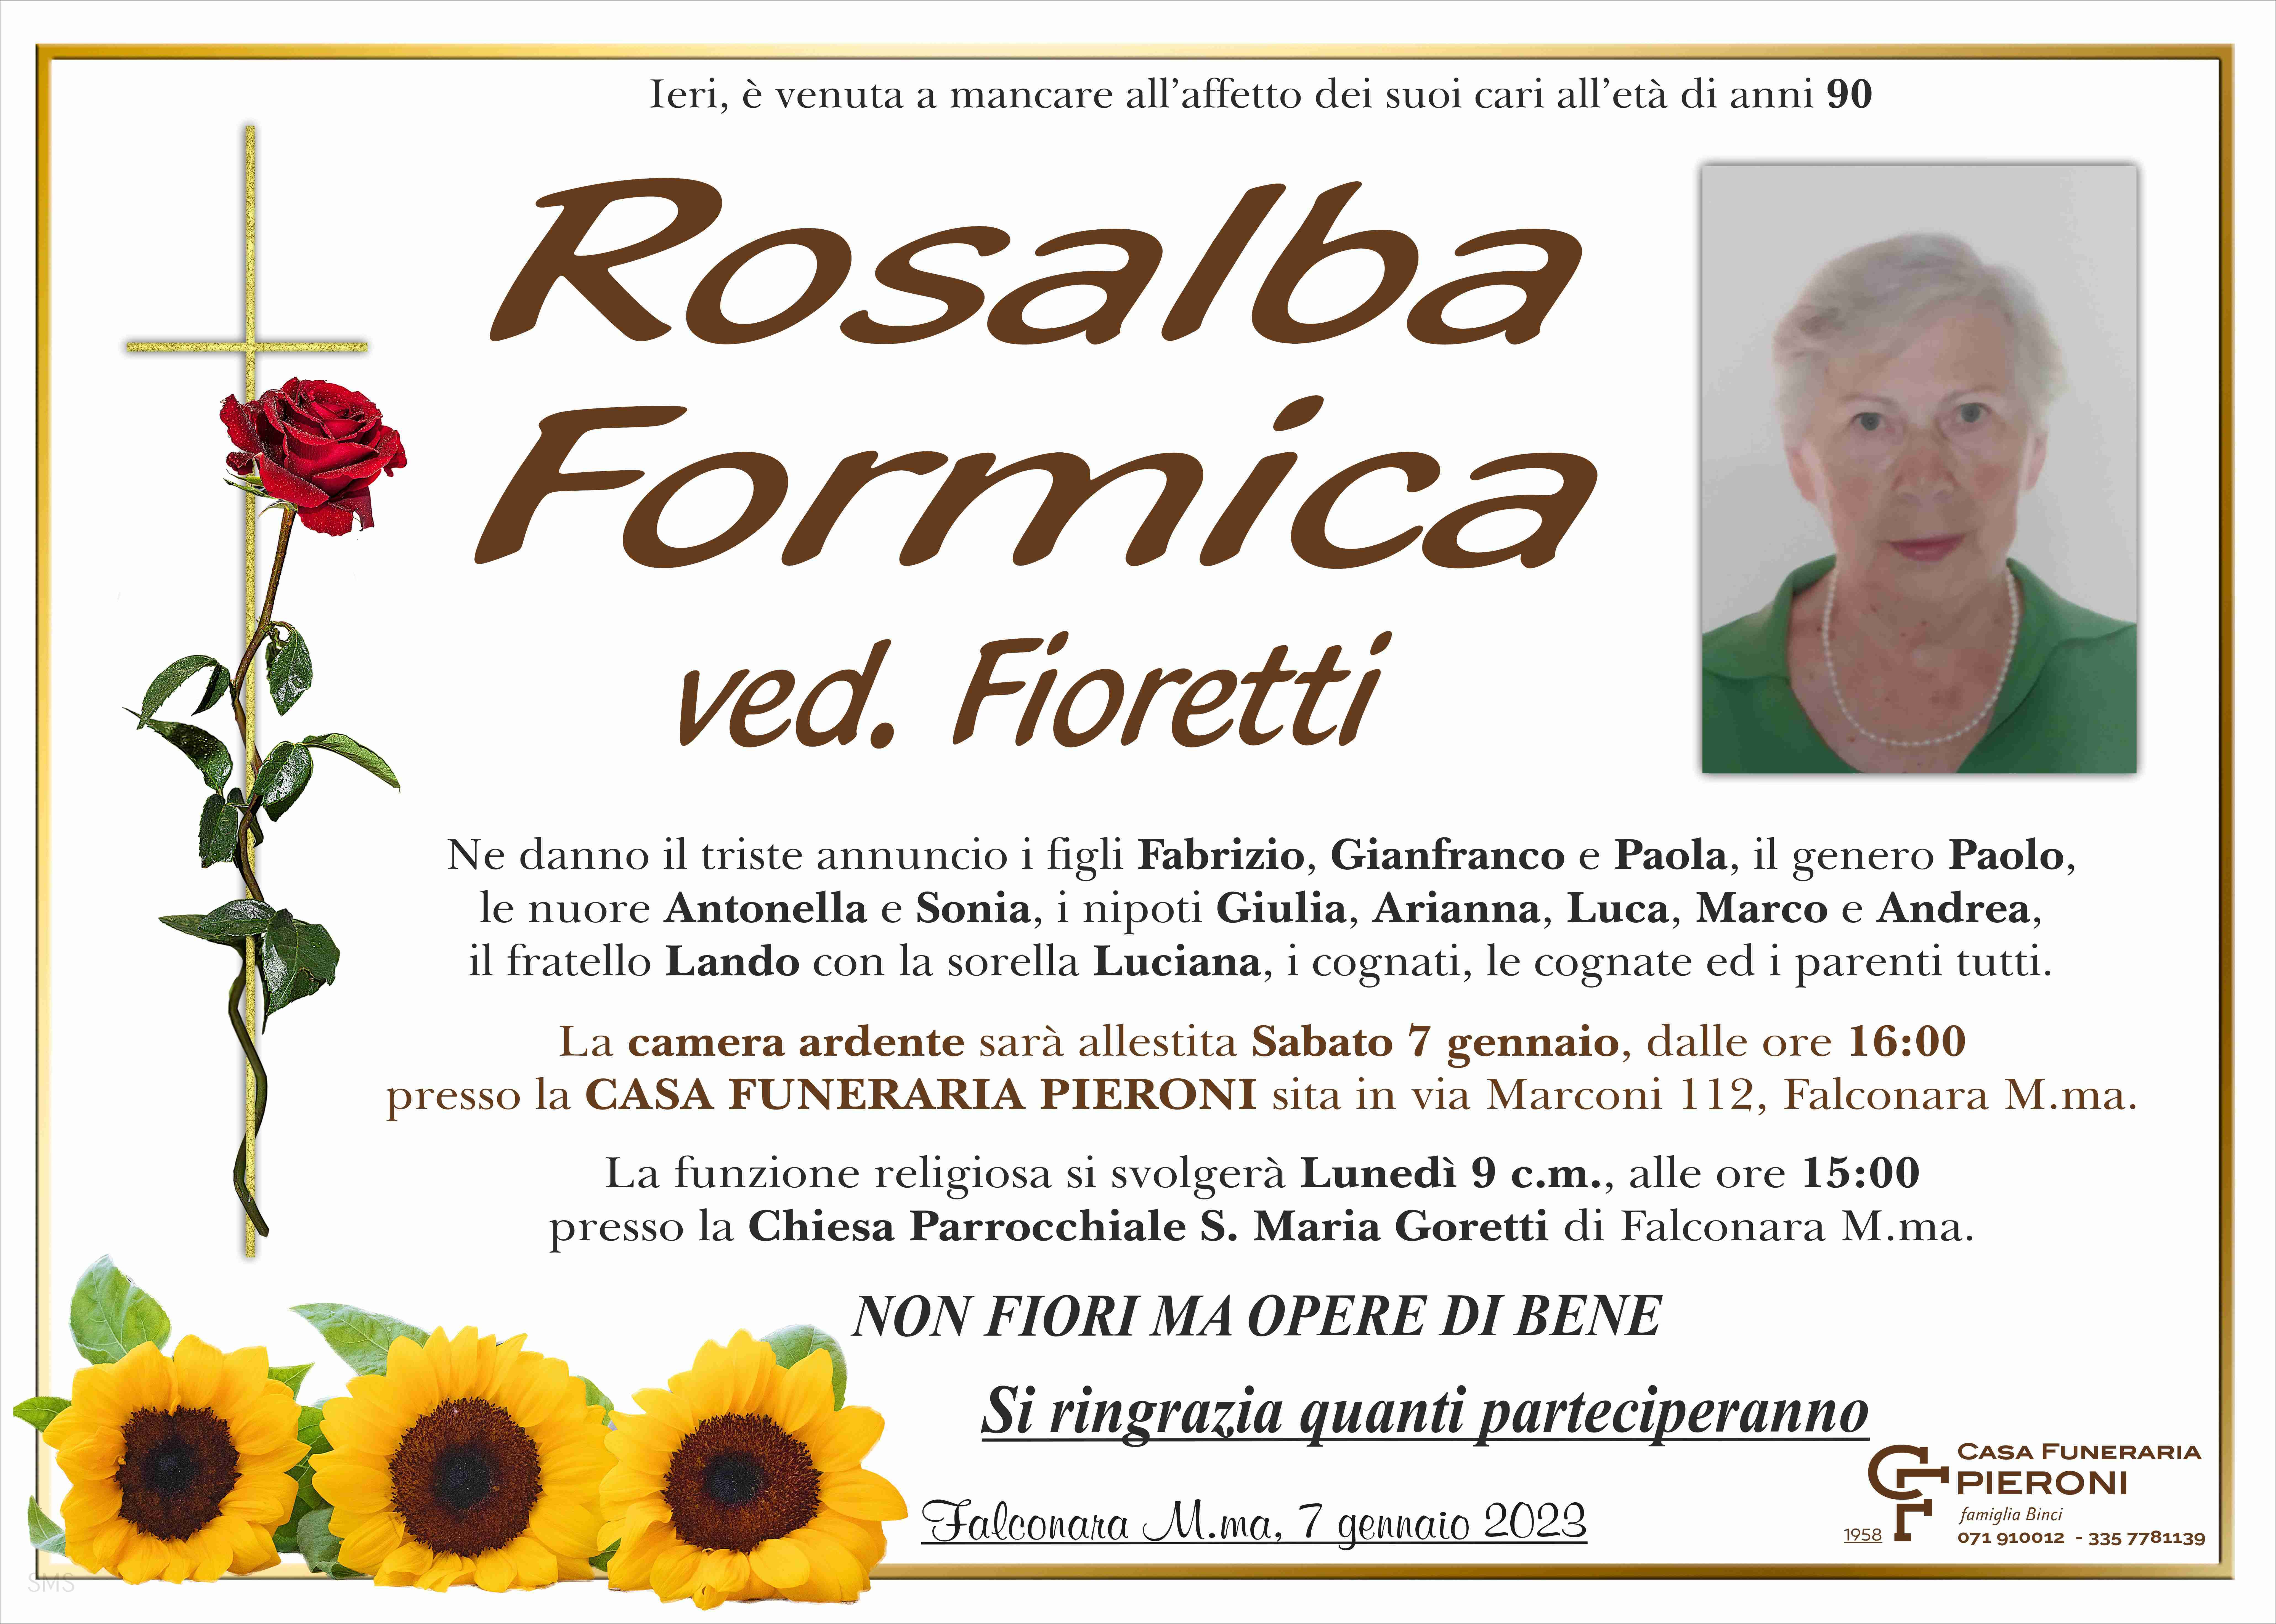 Rosalba Formica